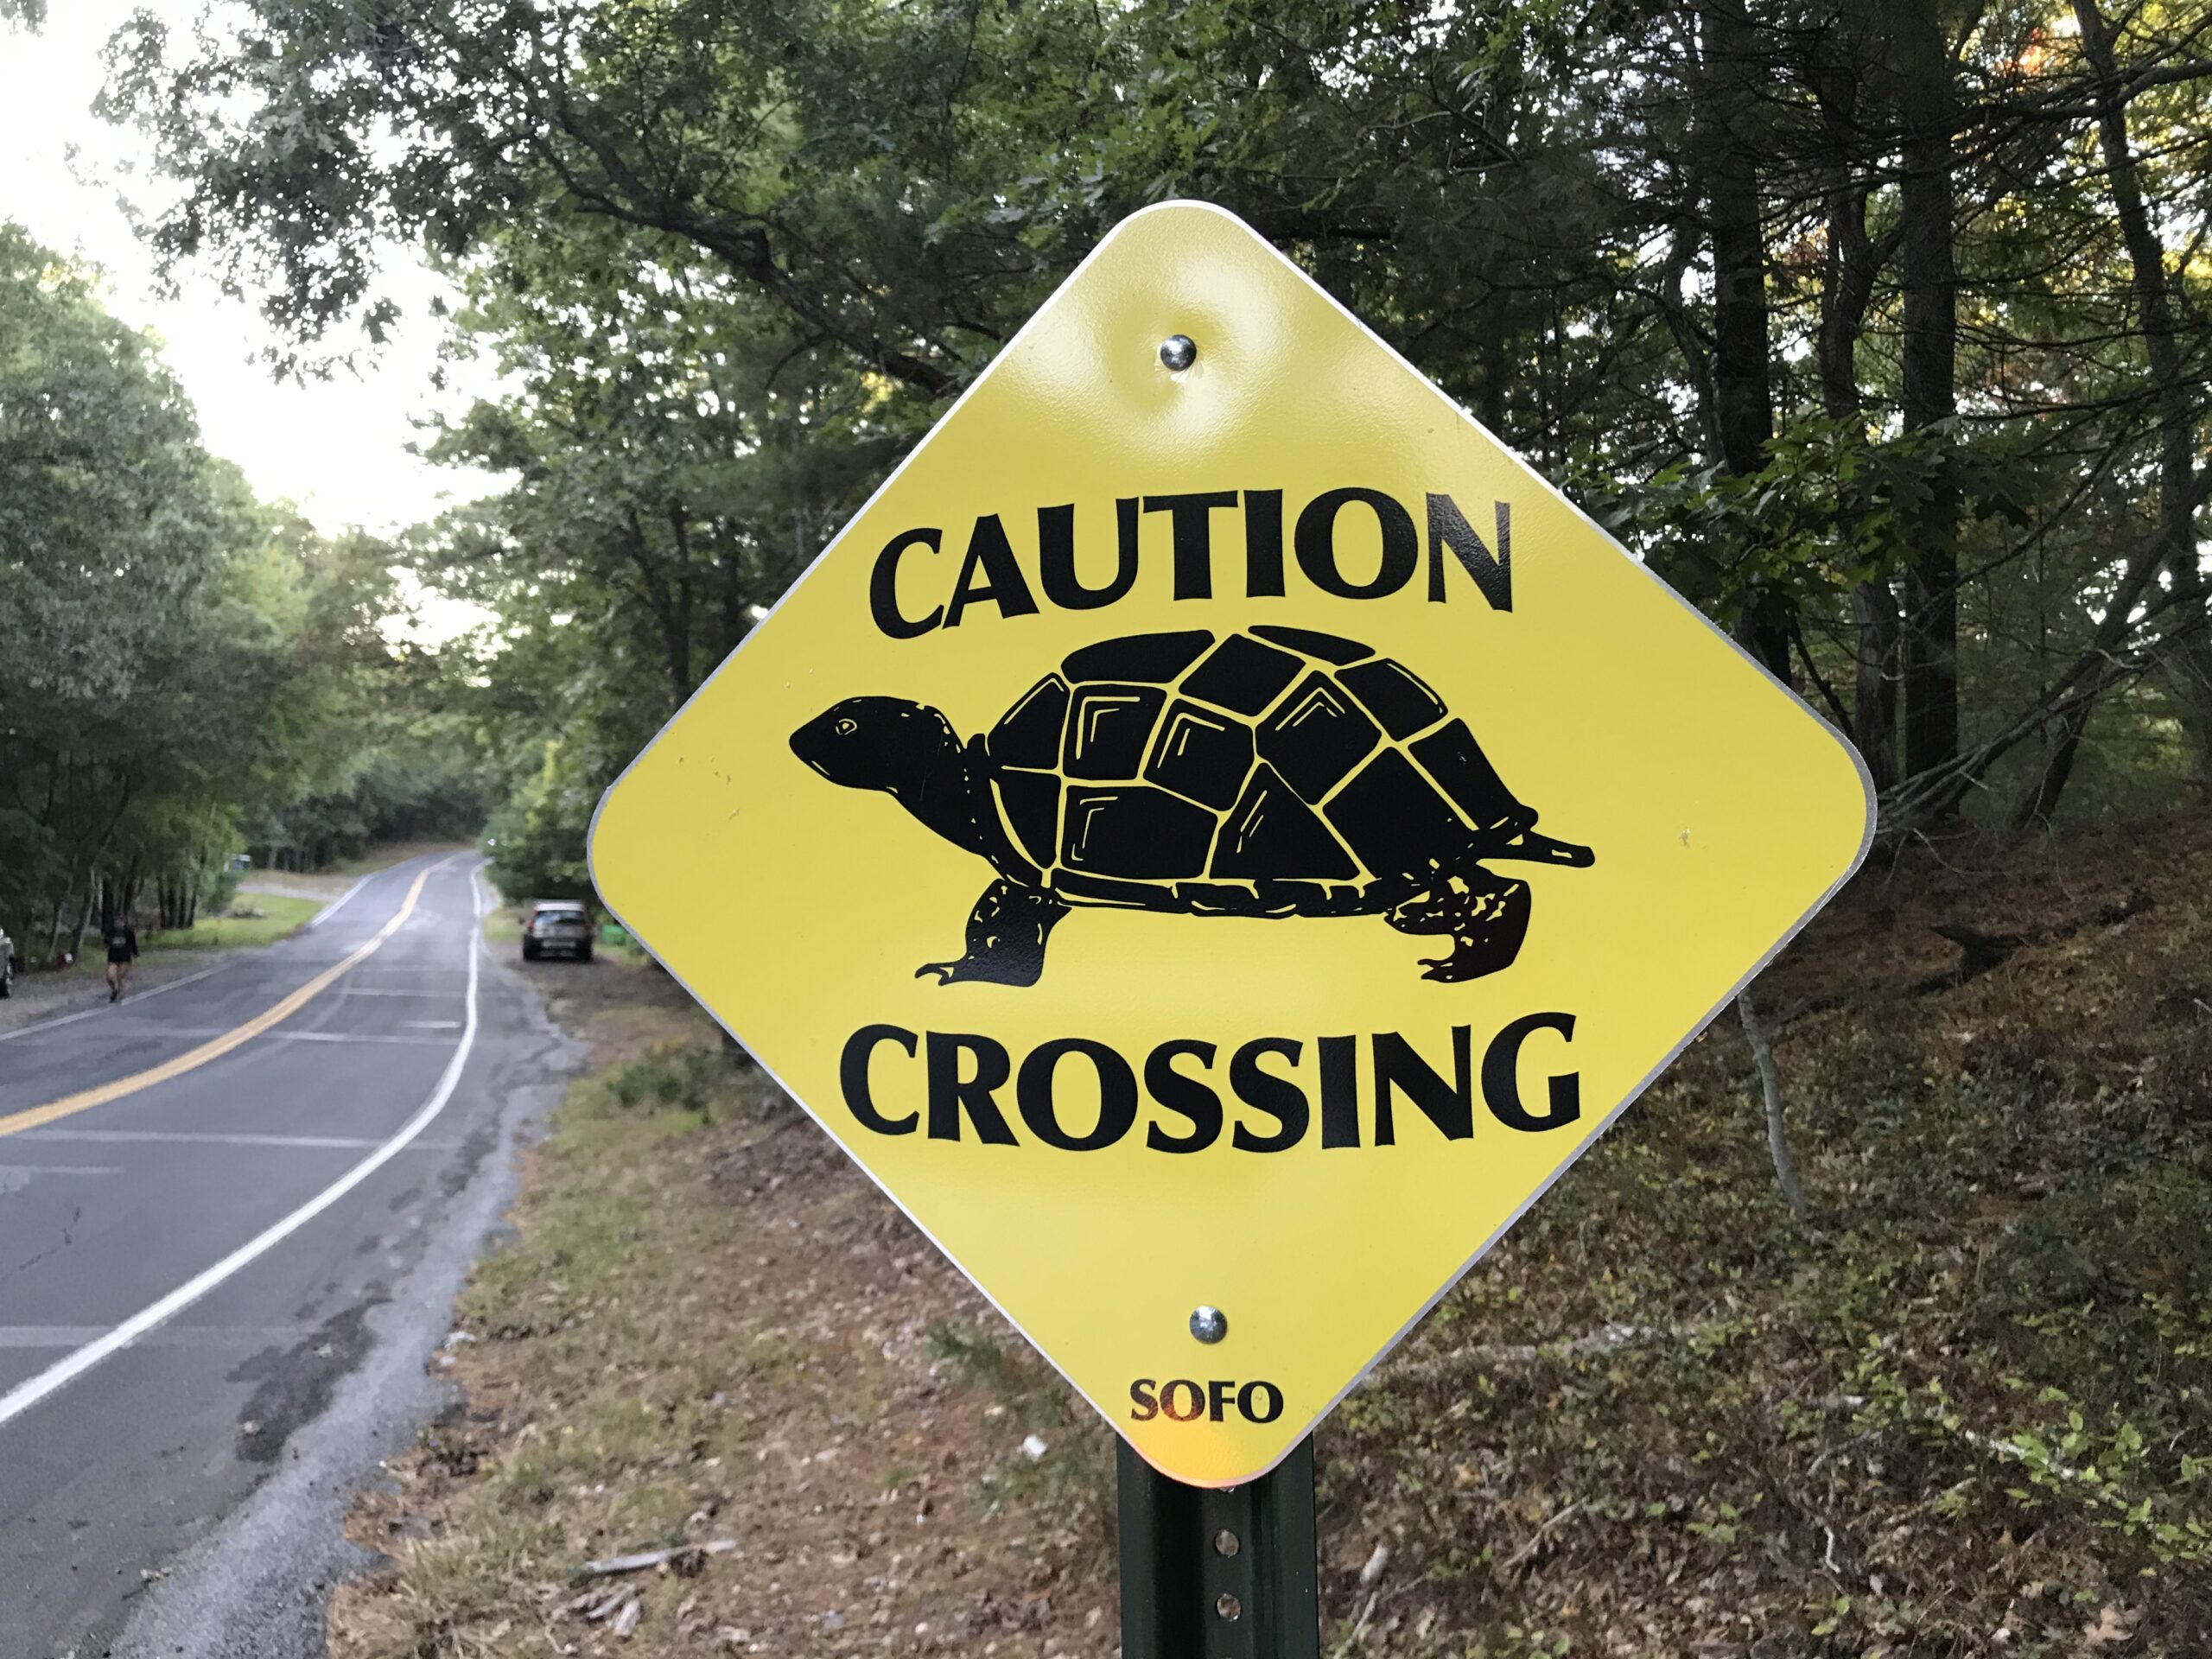 Metal Turtle crossing sign warning